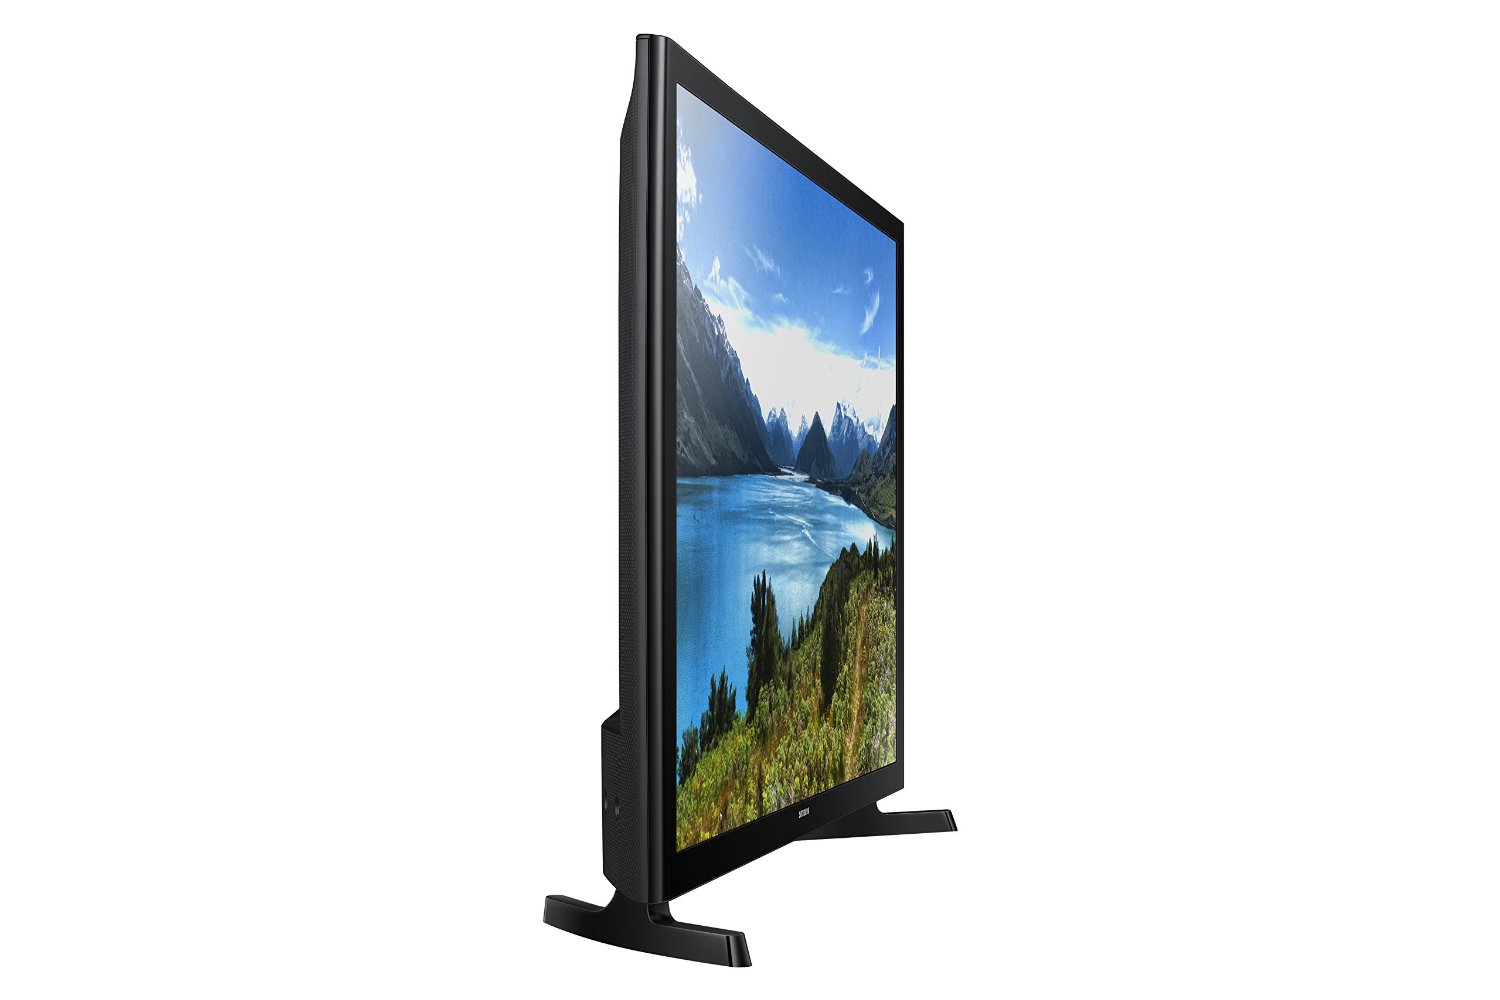 Samsung 32-Inch LED TV